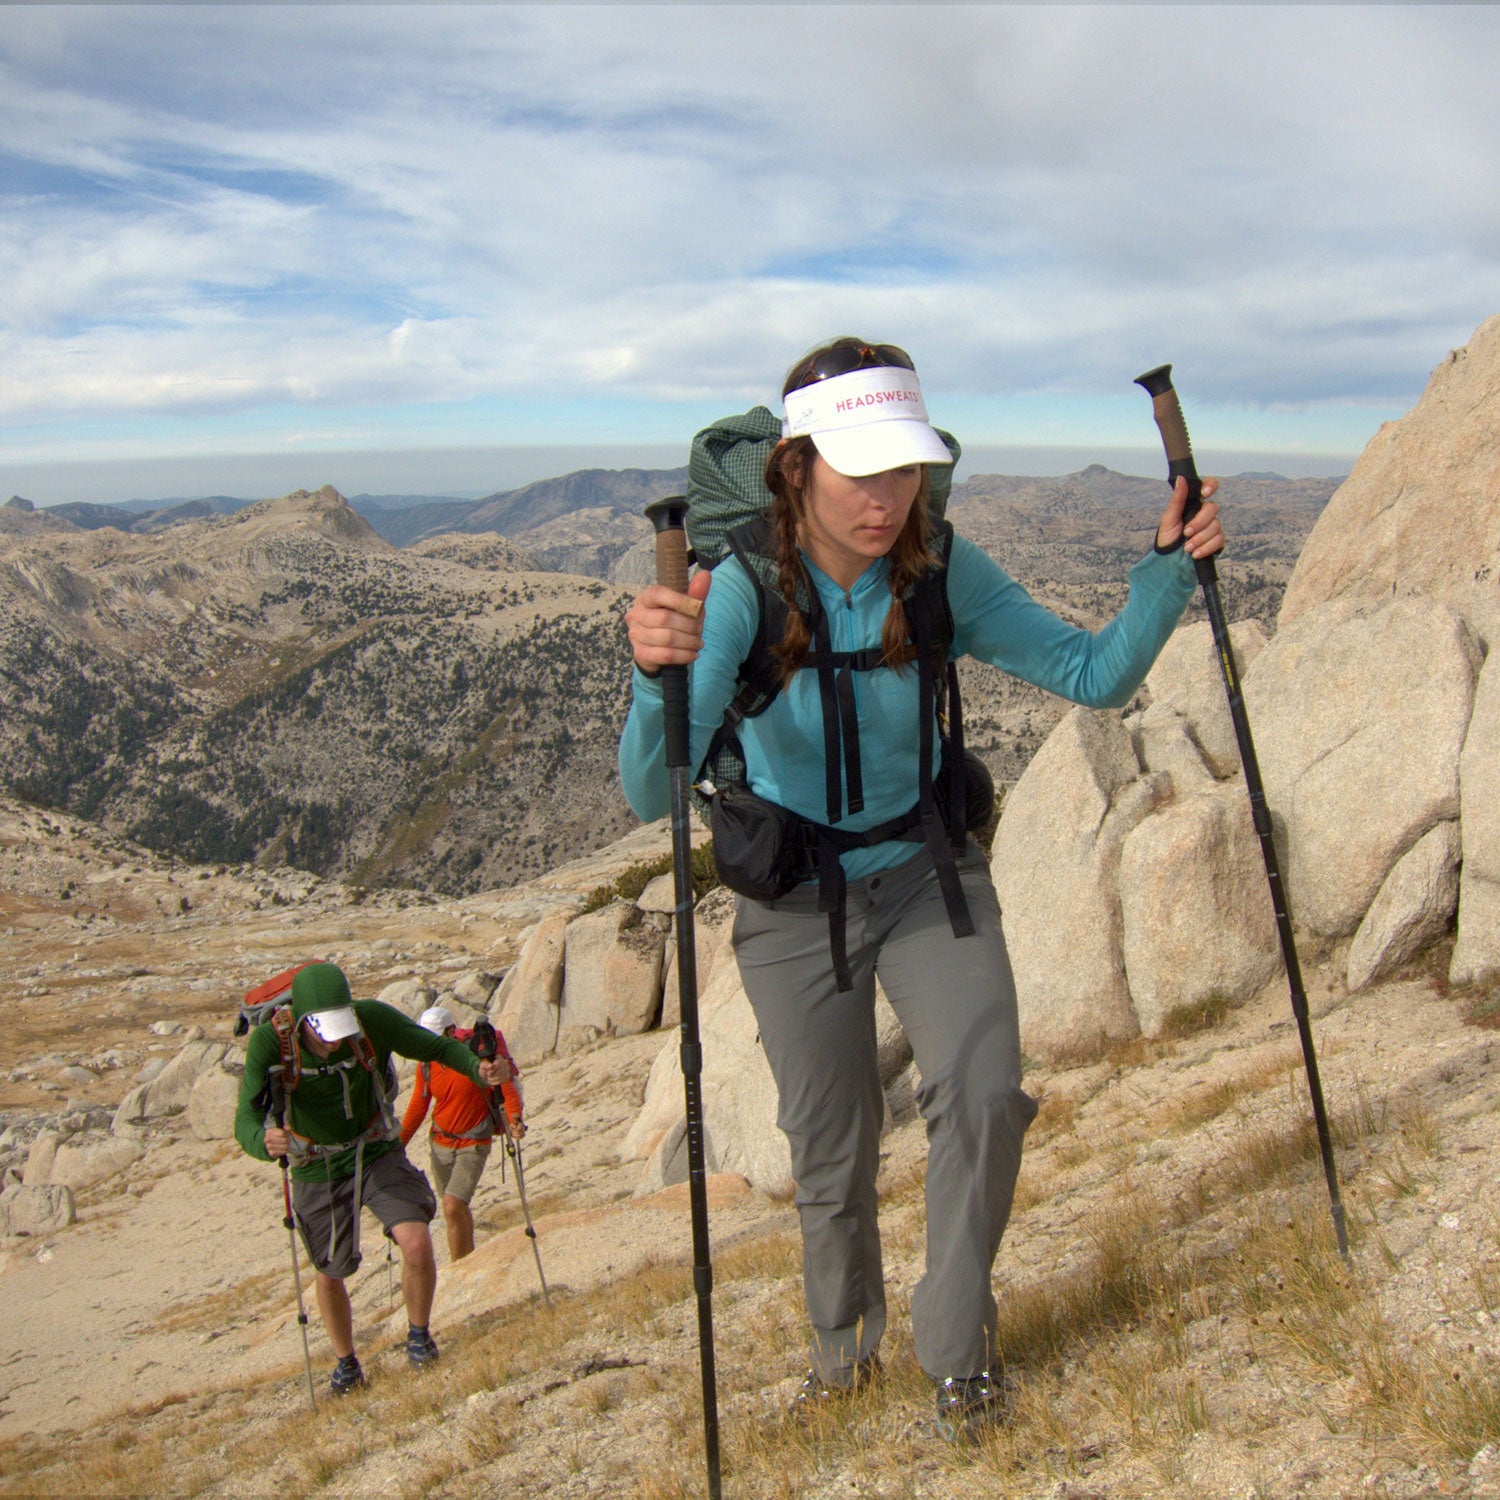 Sierra Designs Women's Hiking Apparel Review - The Trek